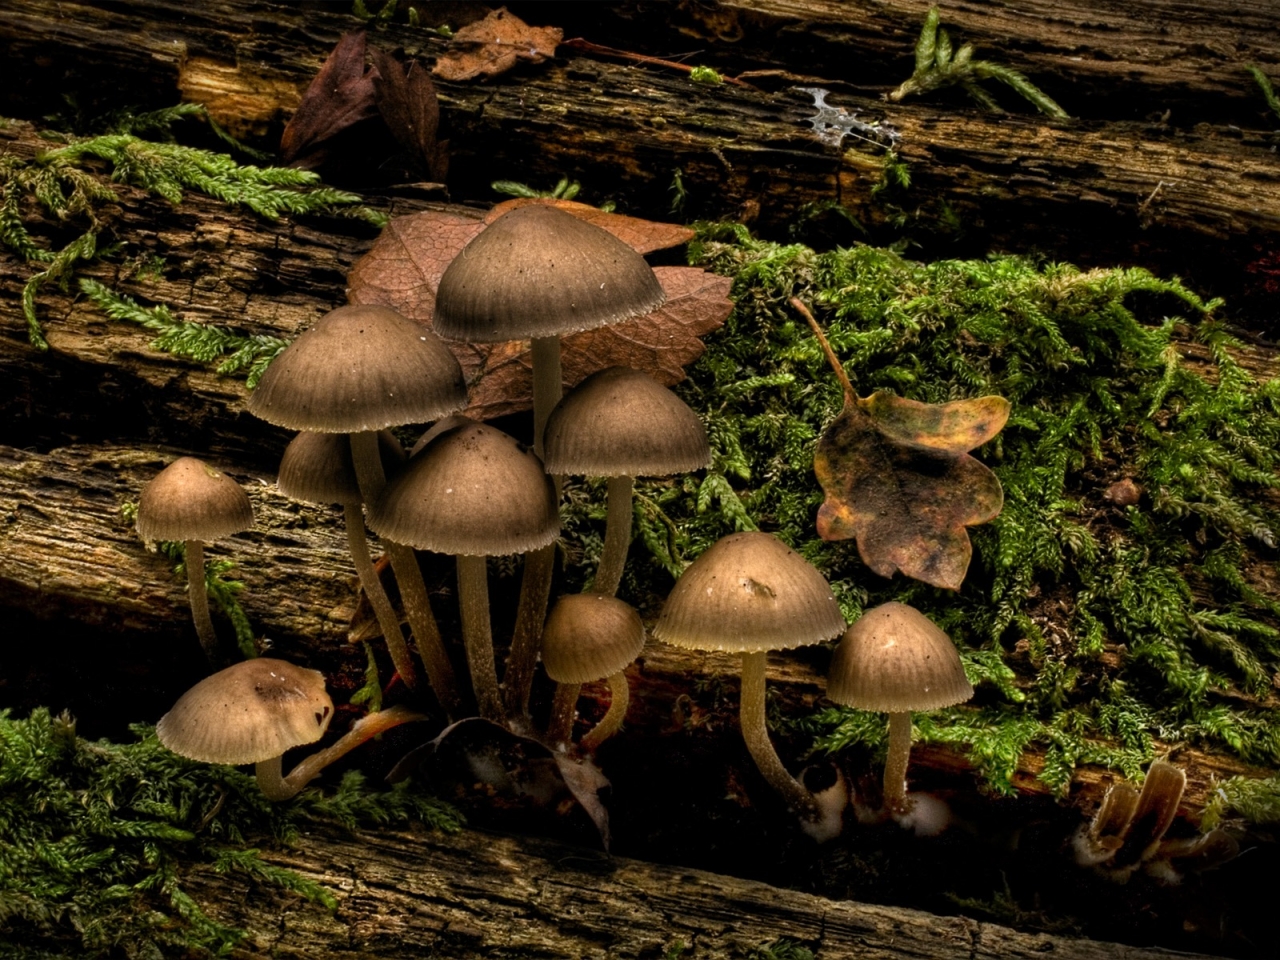 Mushrooms for 1280 x 960 resolution